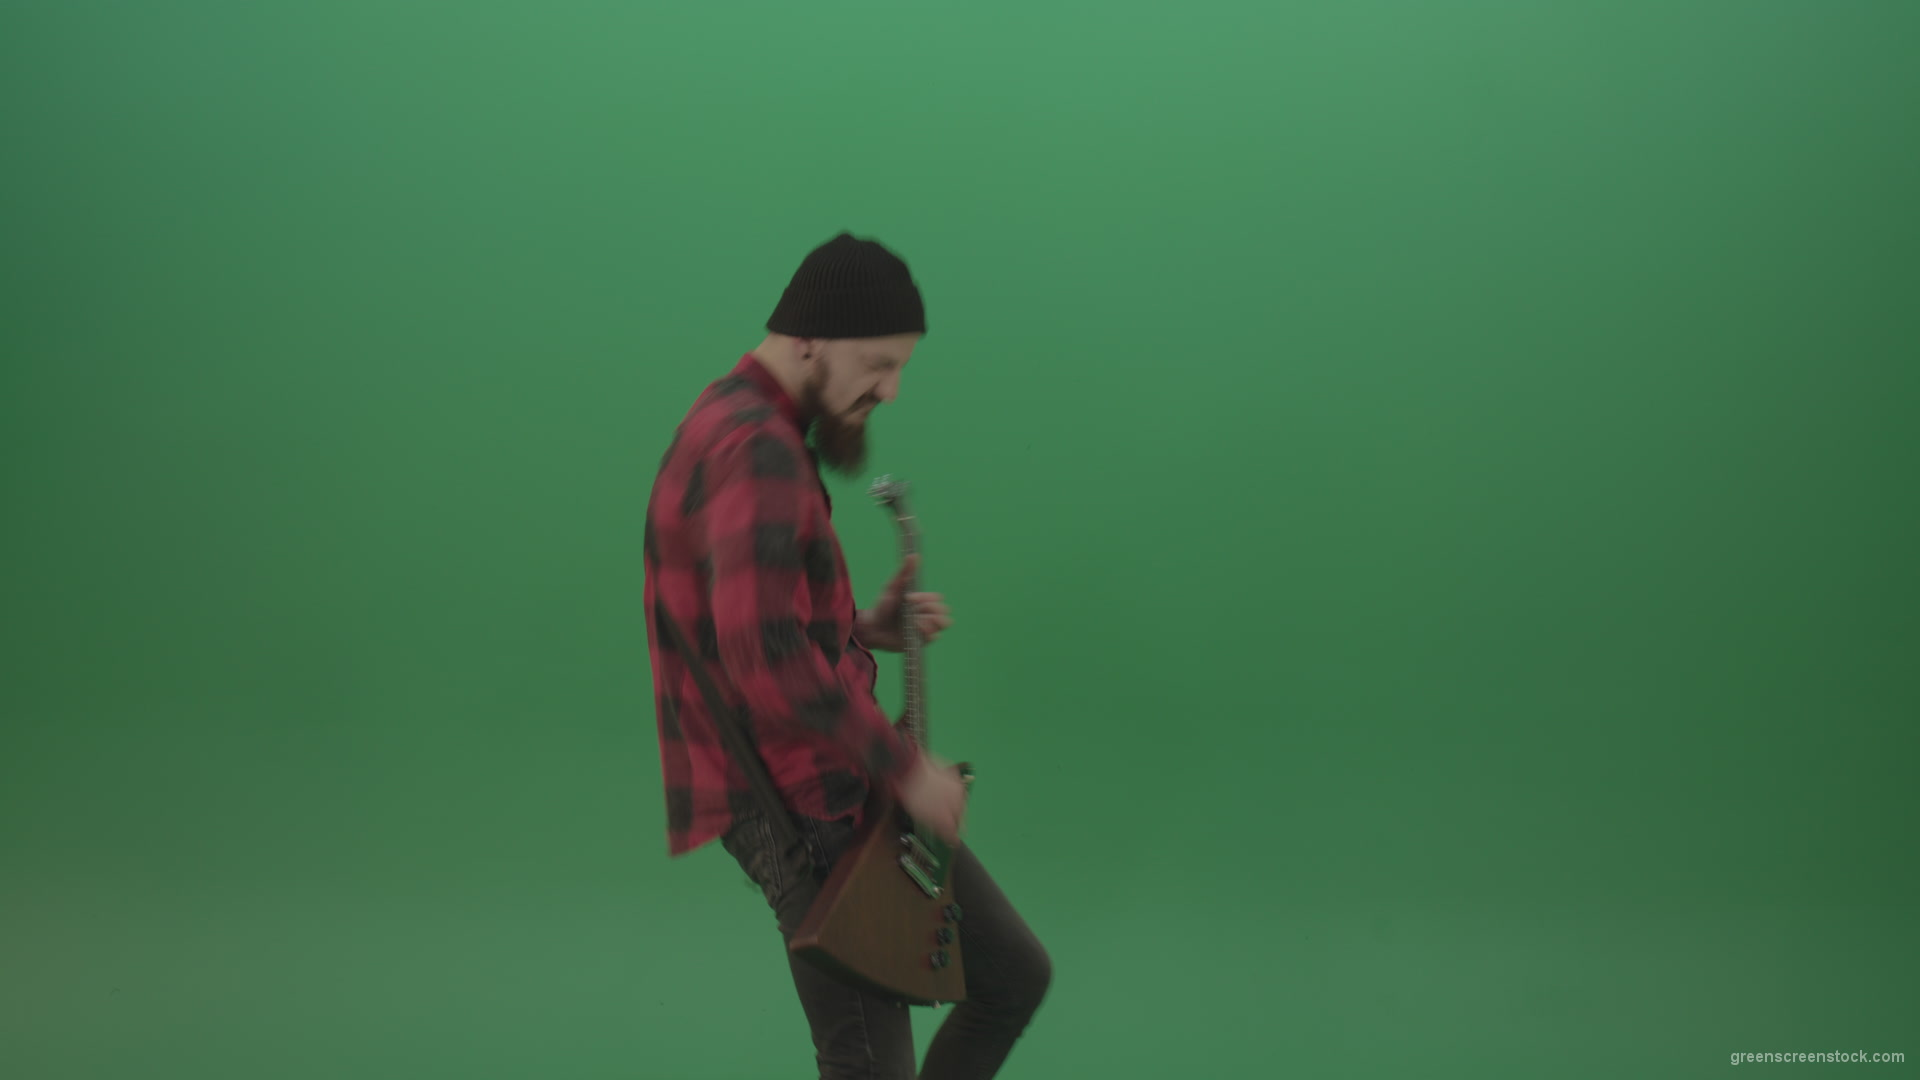 Man-punk-hardrock-guitarist-playing-guitar-in-side-view-in-green-screen-studio_004 Green Screen Stock